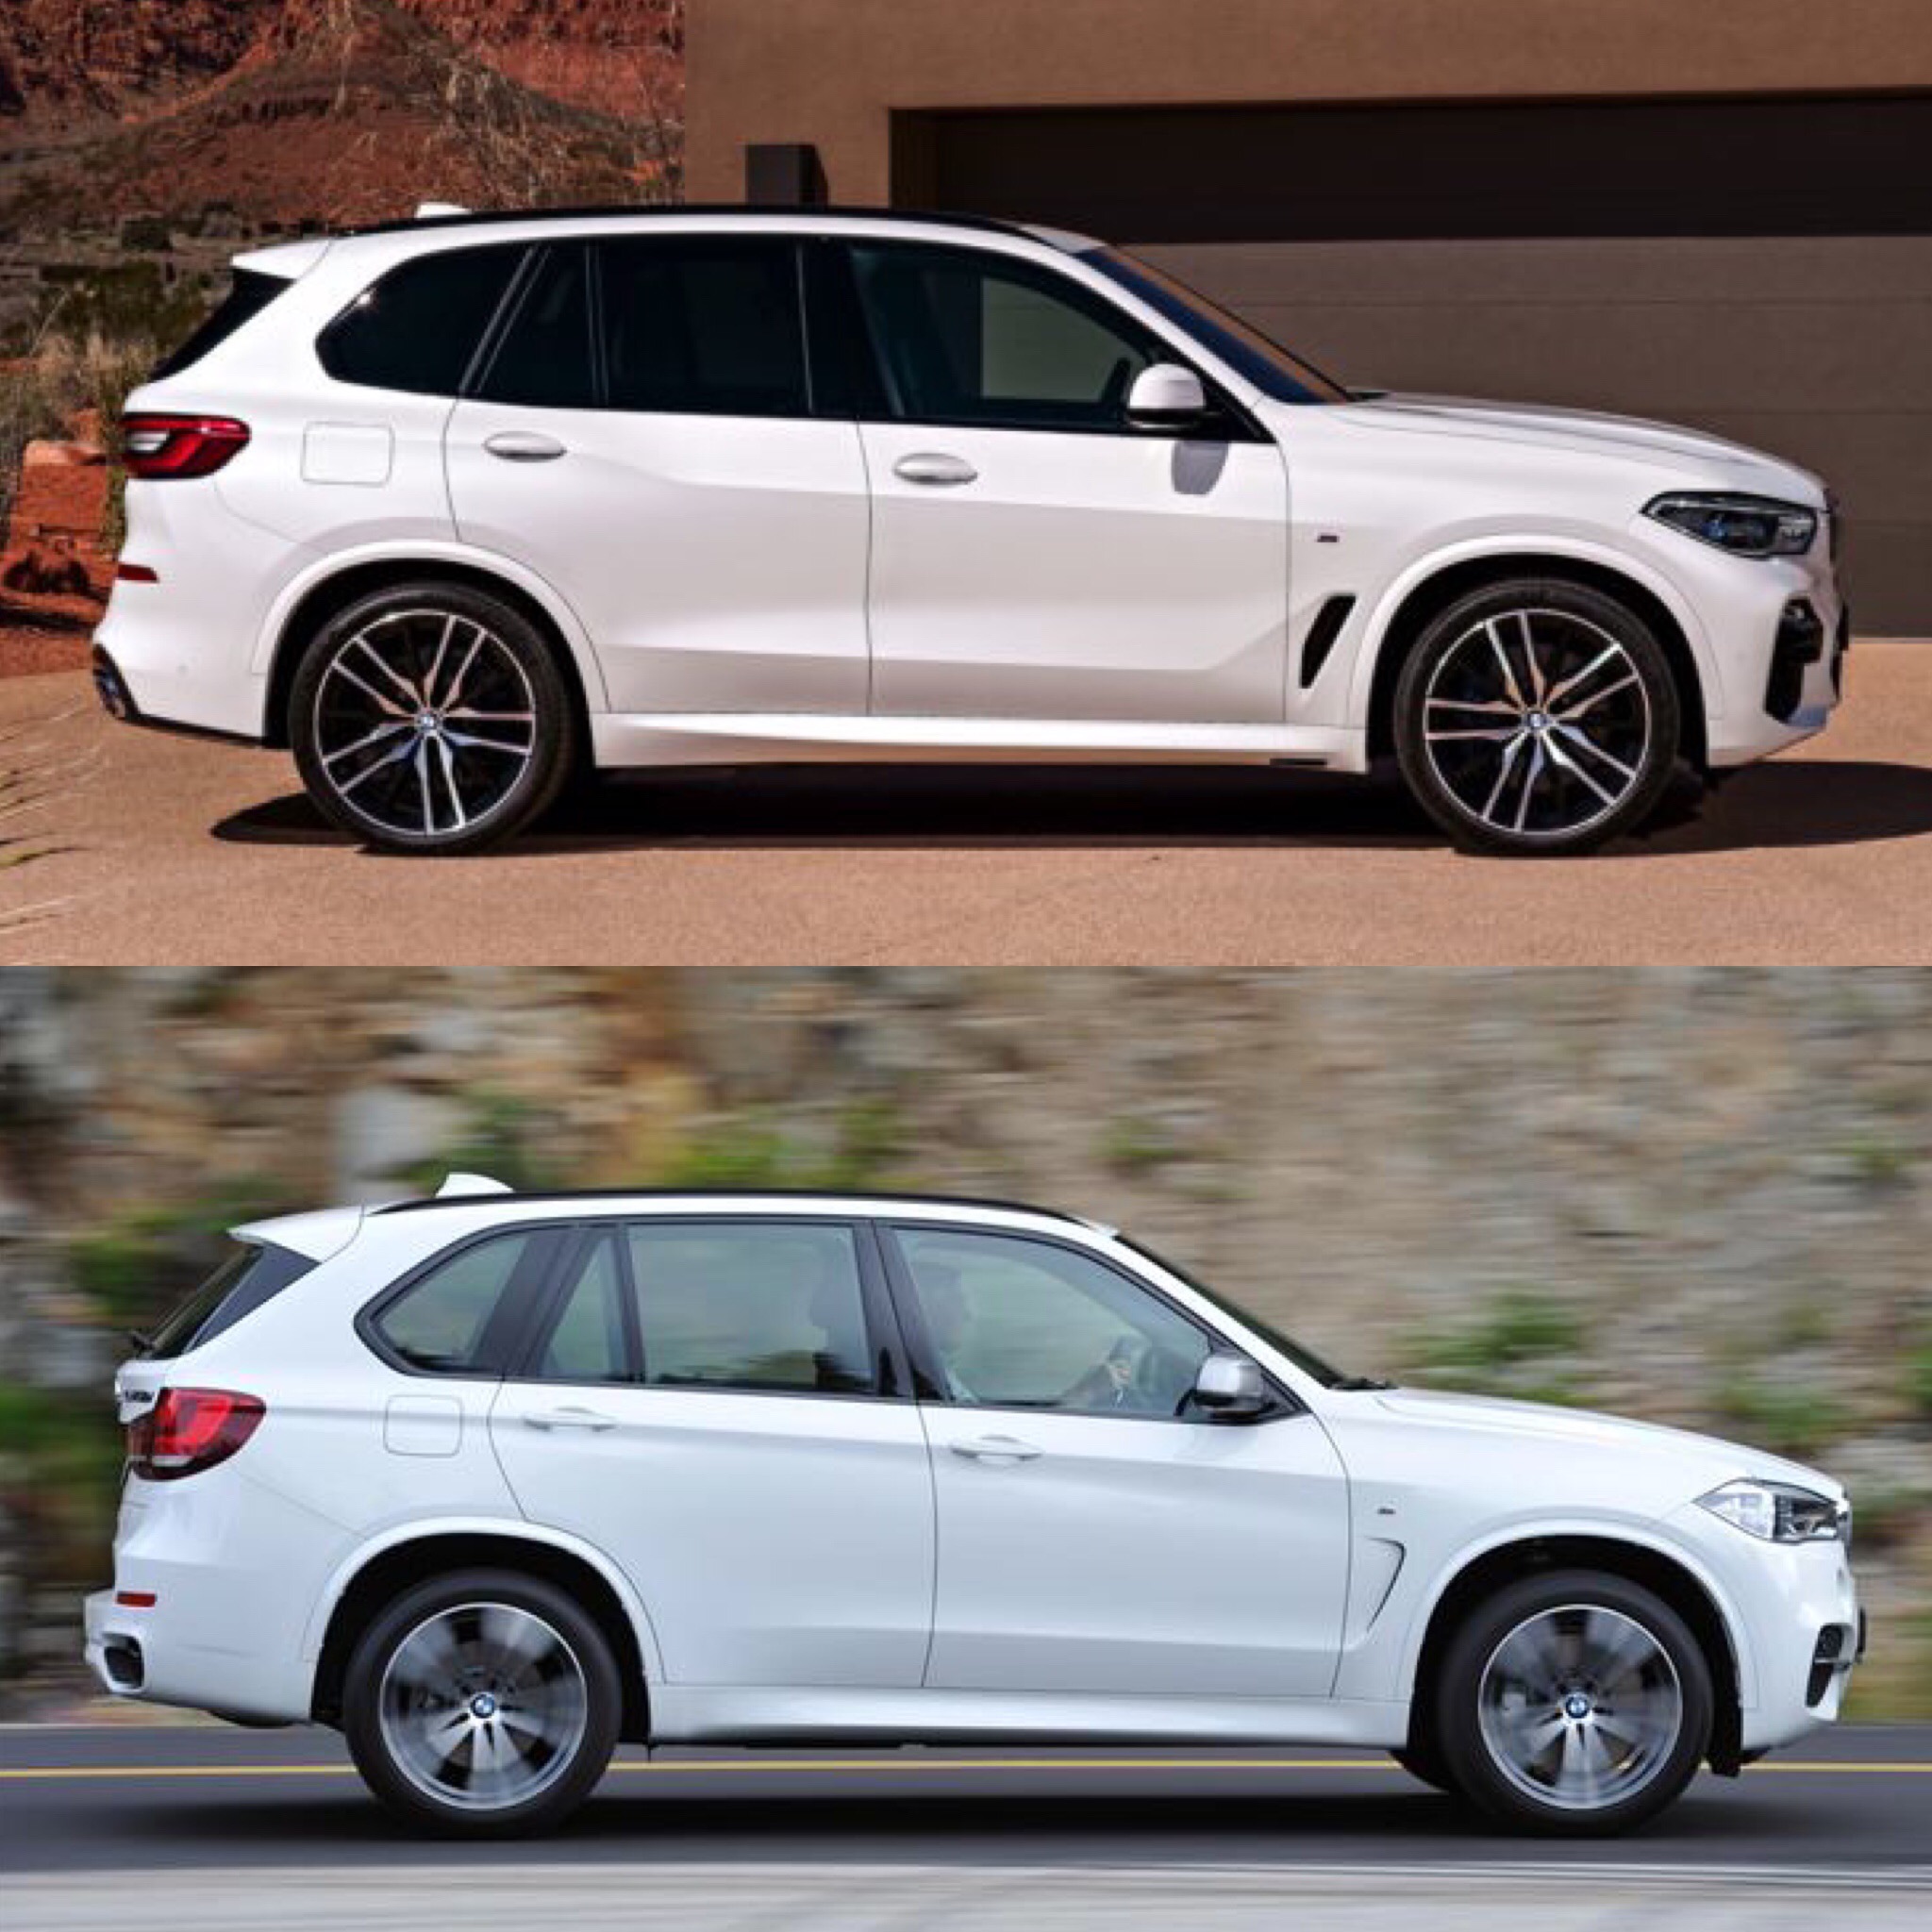 Сравнение бмв х5. F15 BMW vs g05. X5 f15 и g05. БМВ х5 кузов f15. X5 f15 vs g05.